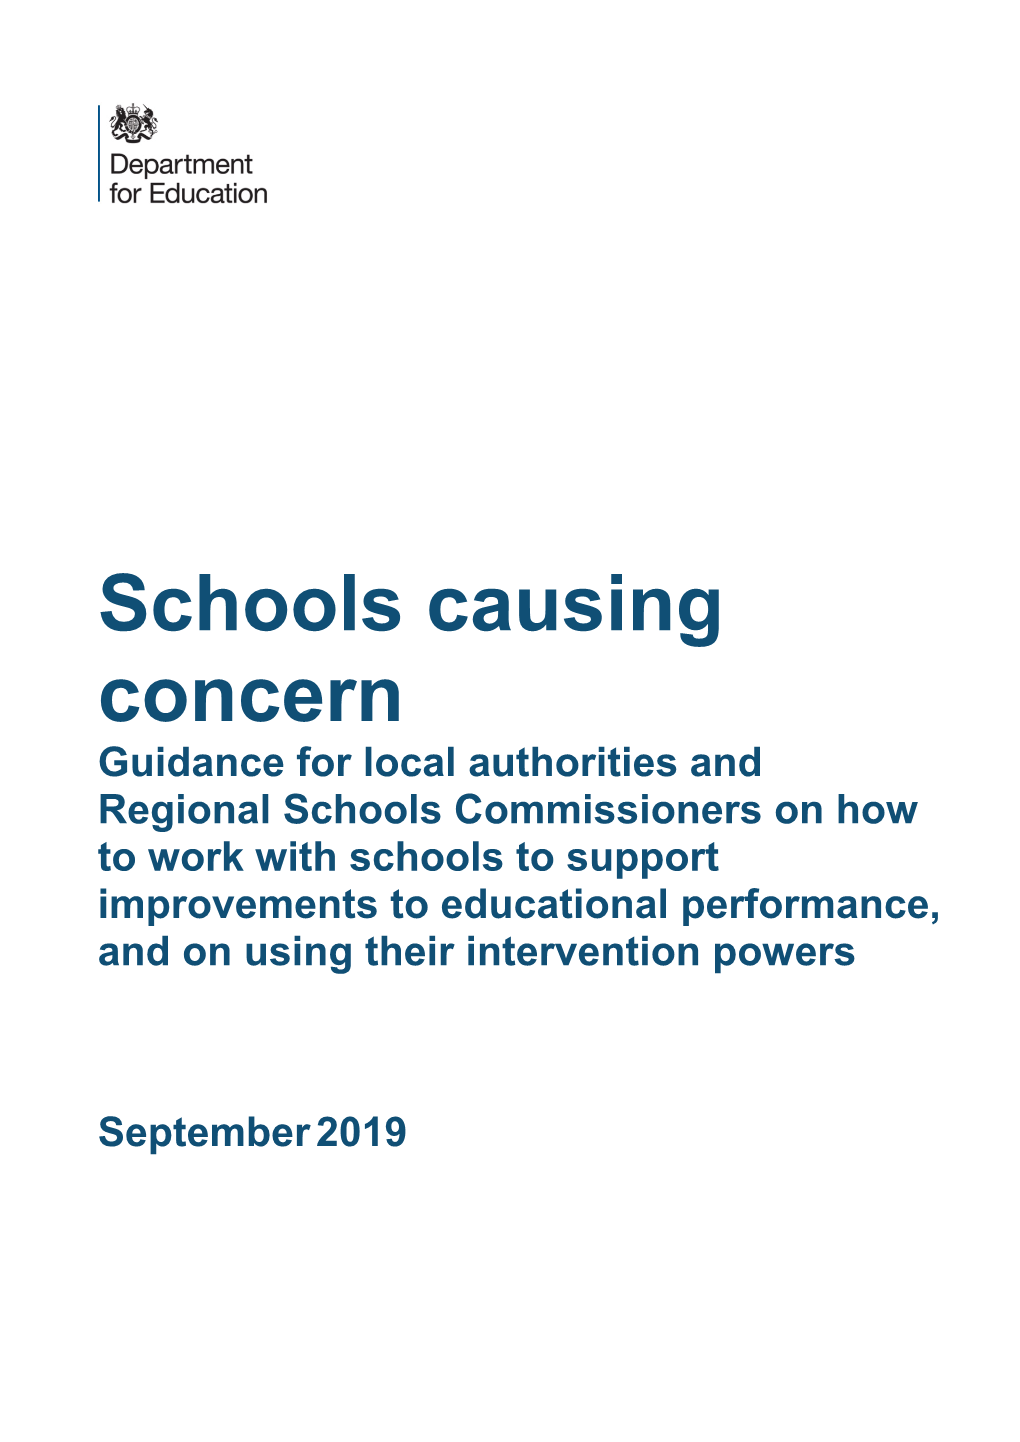 Schools Causing Concern Guidance